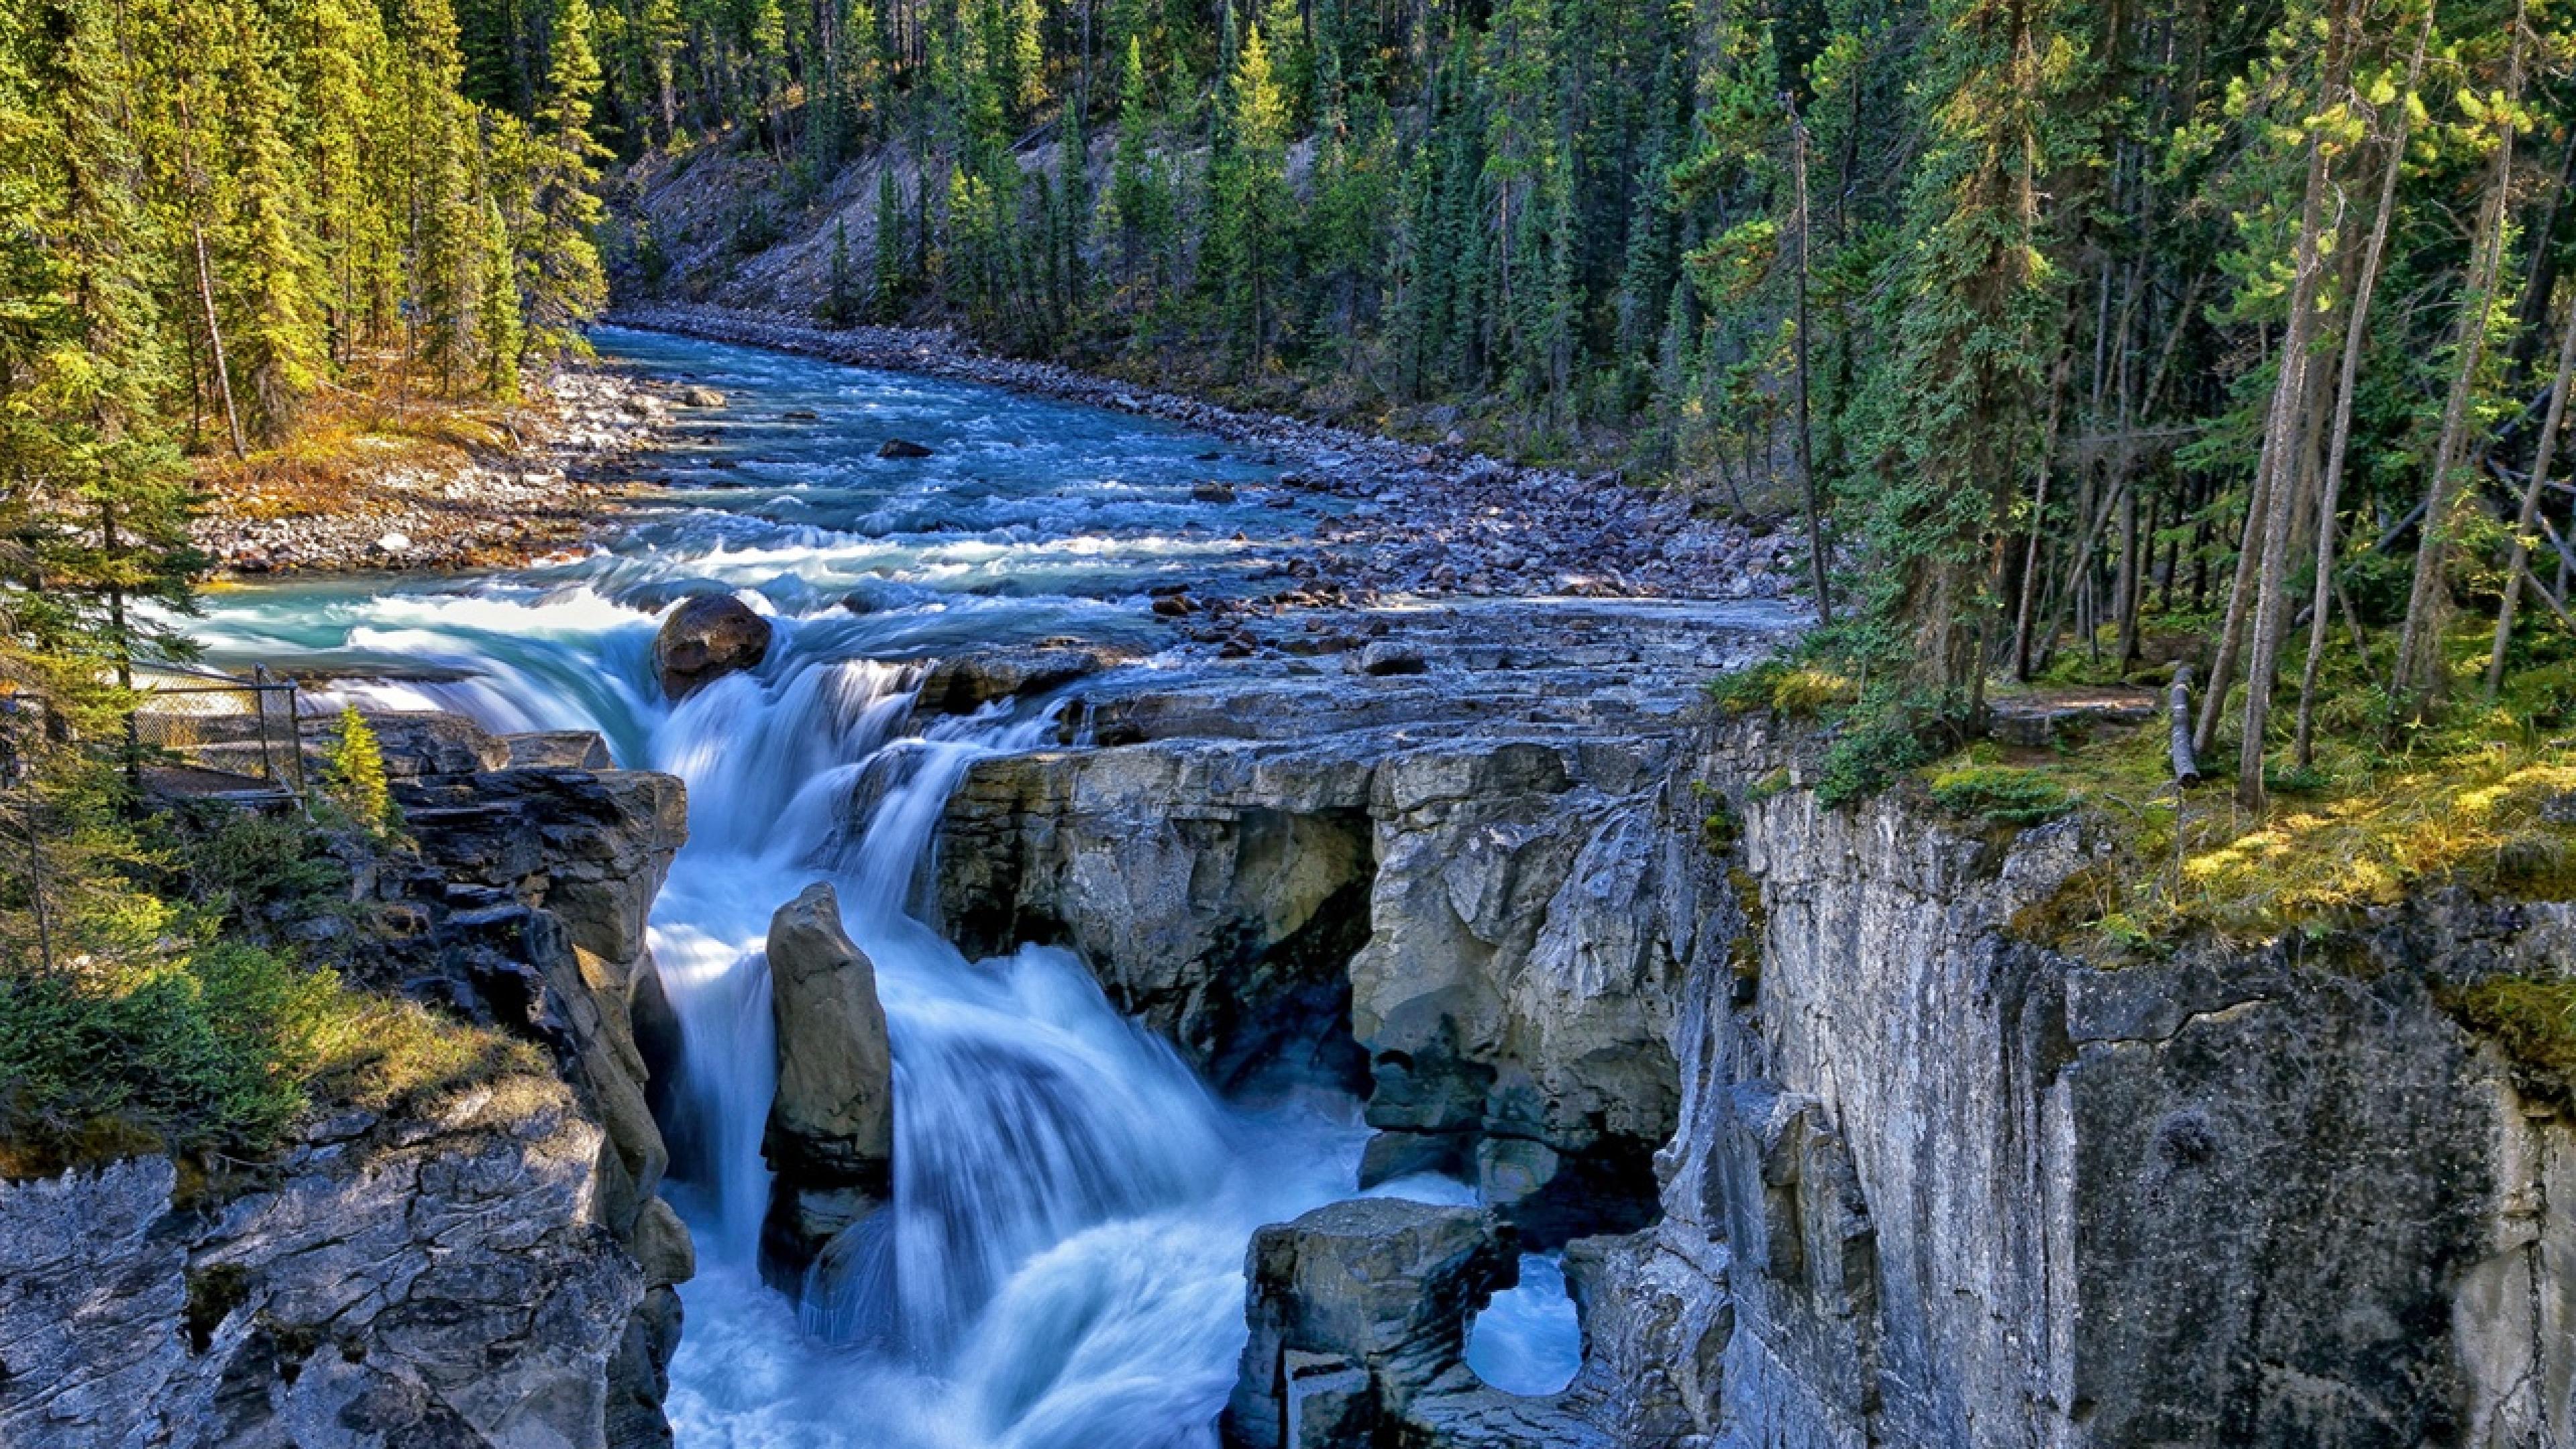 True falls. Водопад Киваккакоски. Национальный парк Джаспер, Канада водопад. Водопад Сануэпта Канада. Река Падас Карелия.